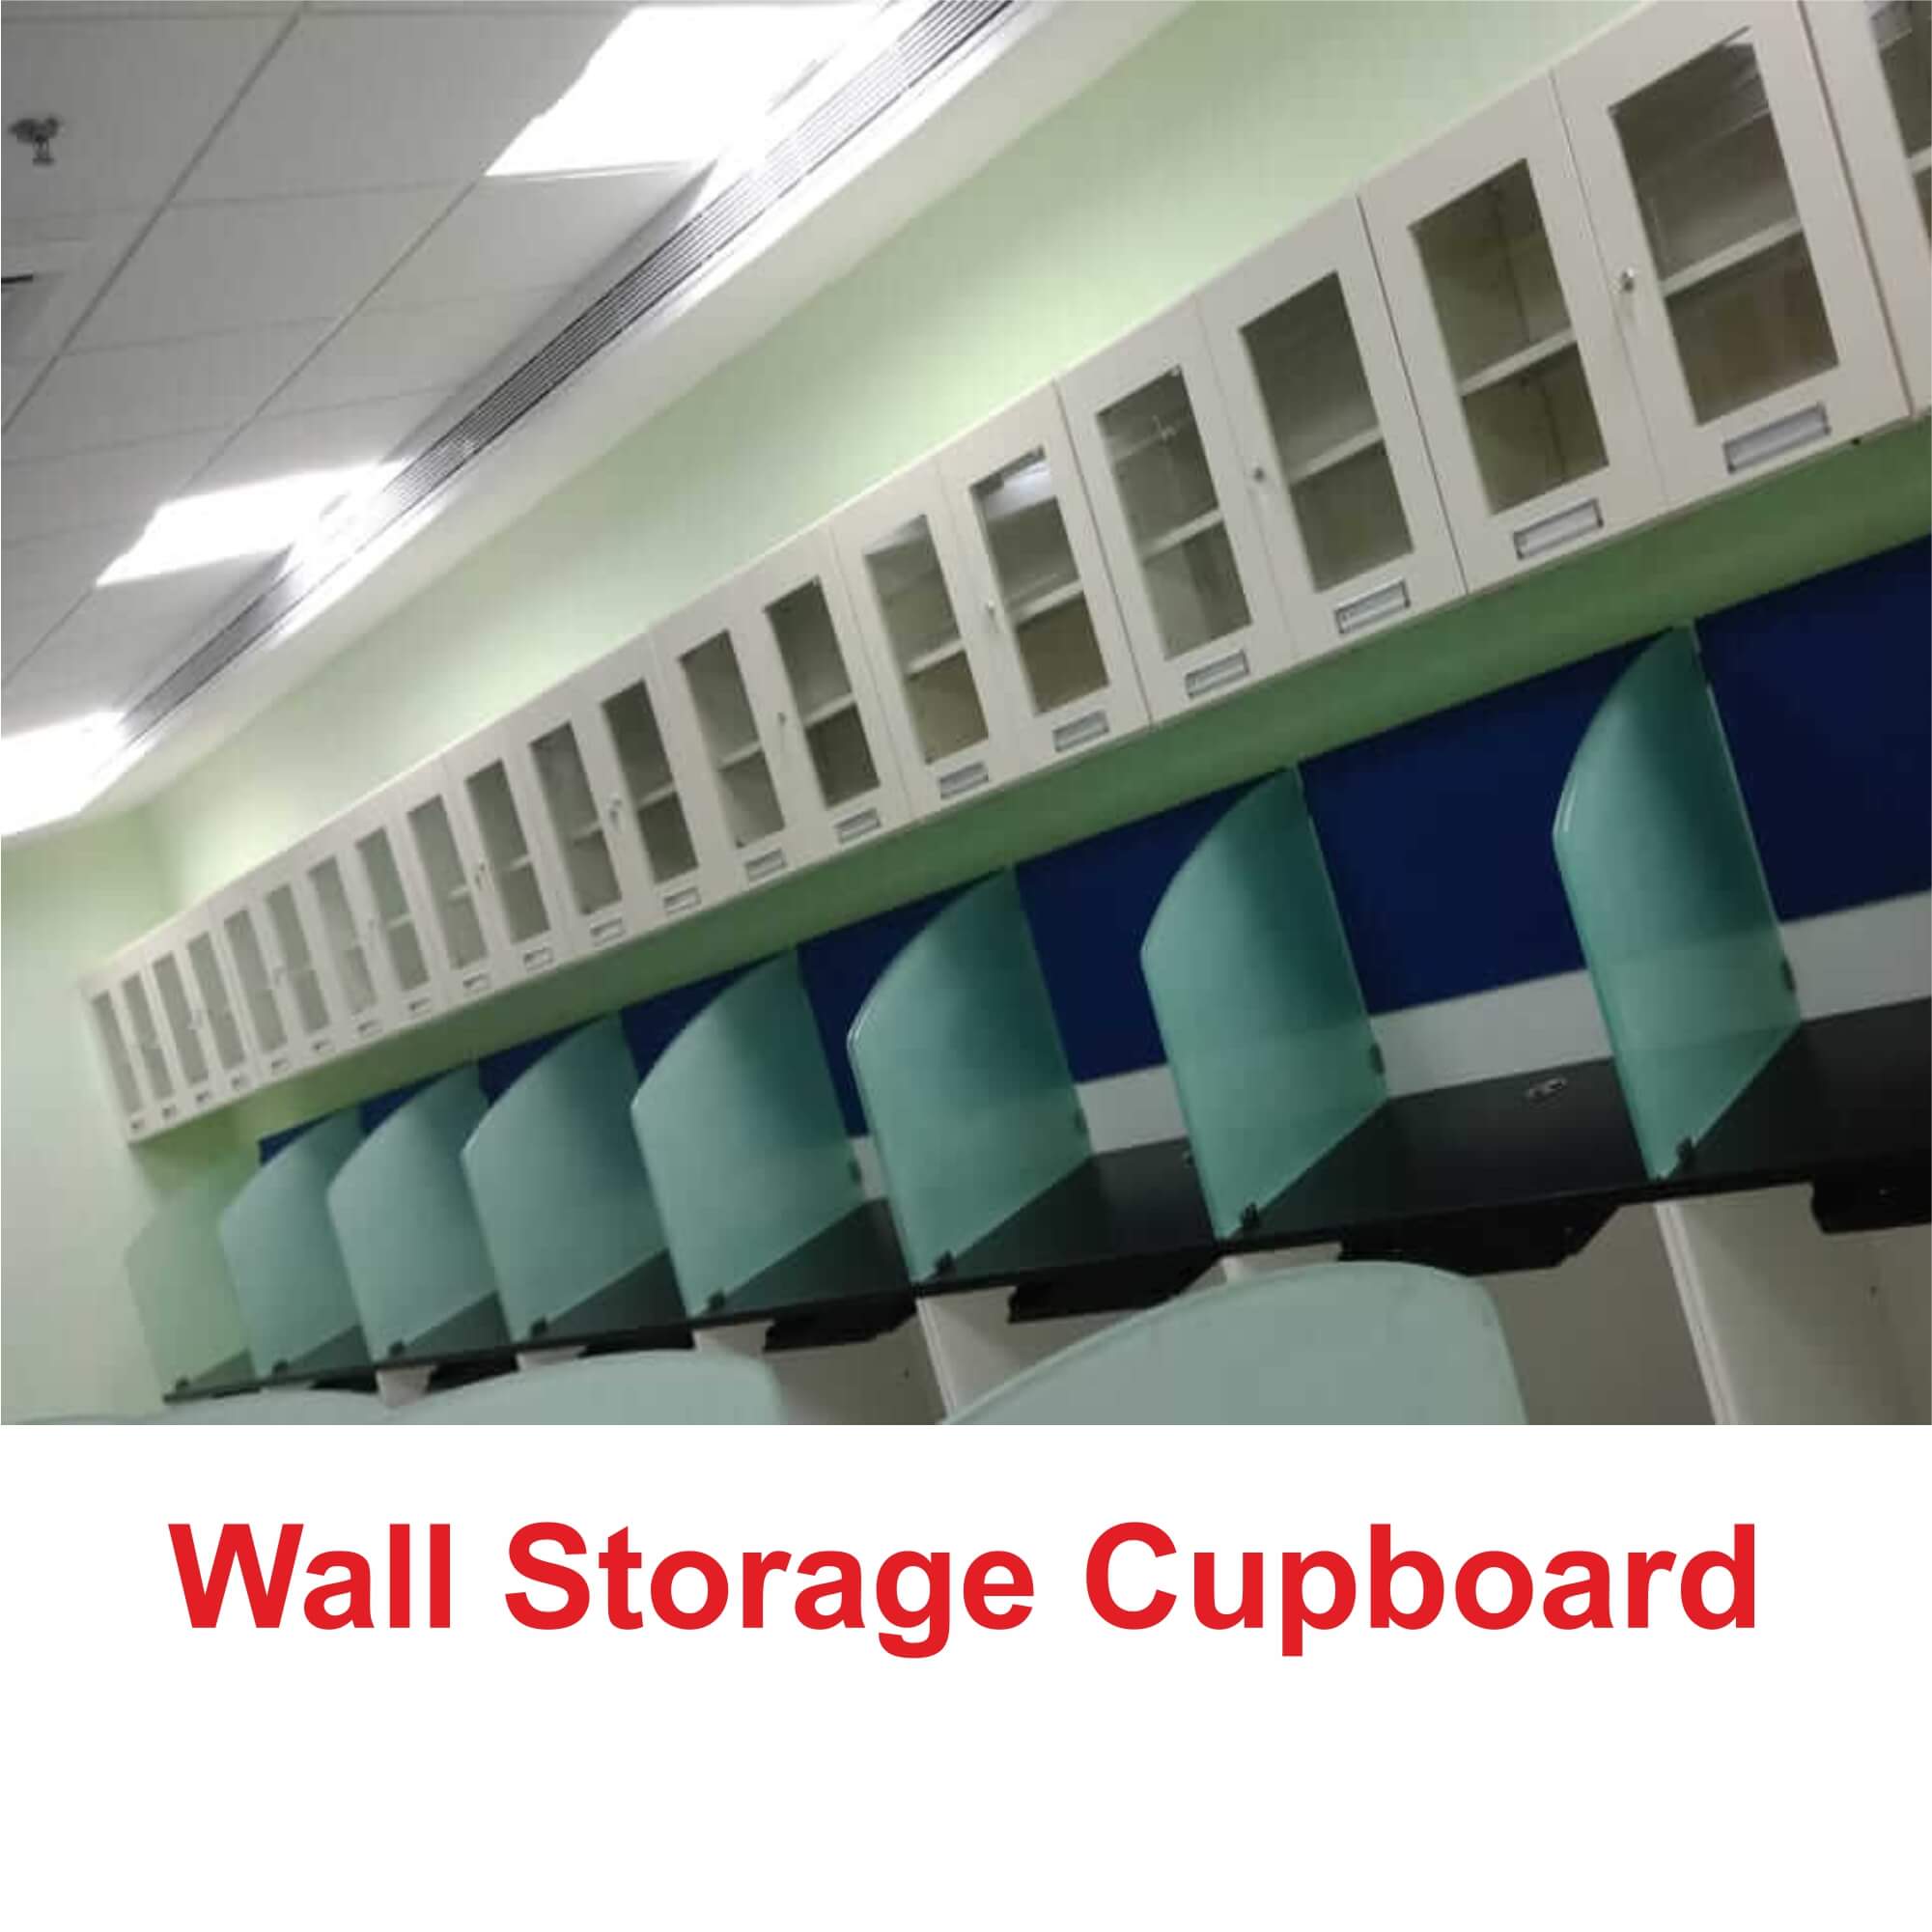 Wall Storage Cupboard Manufacturer in India